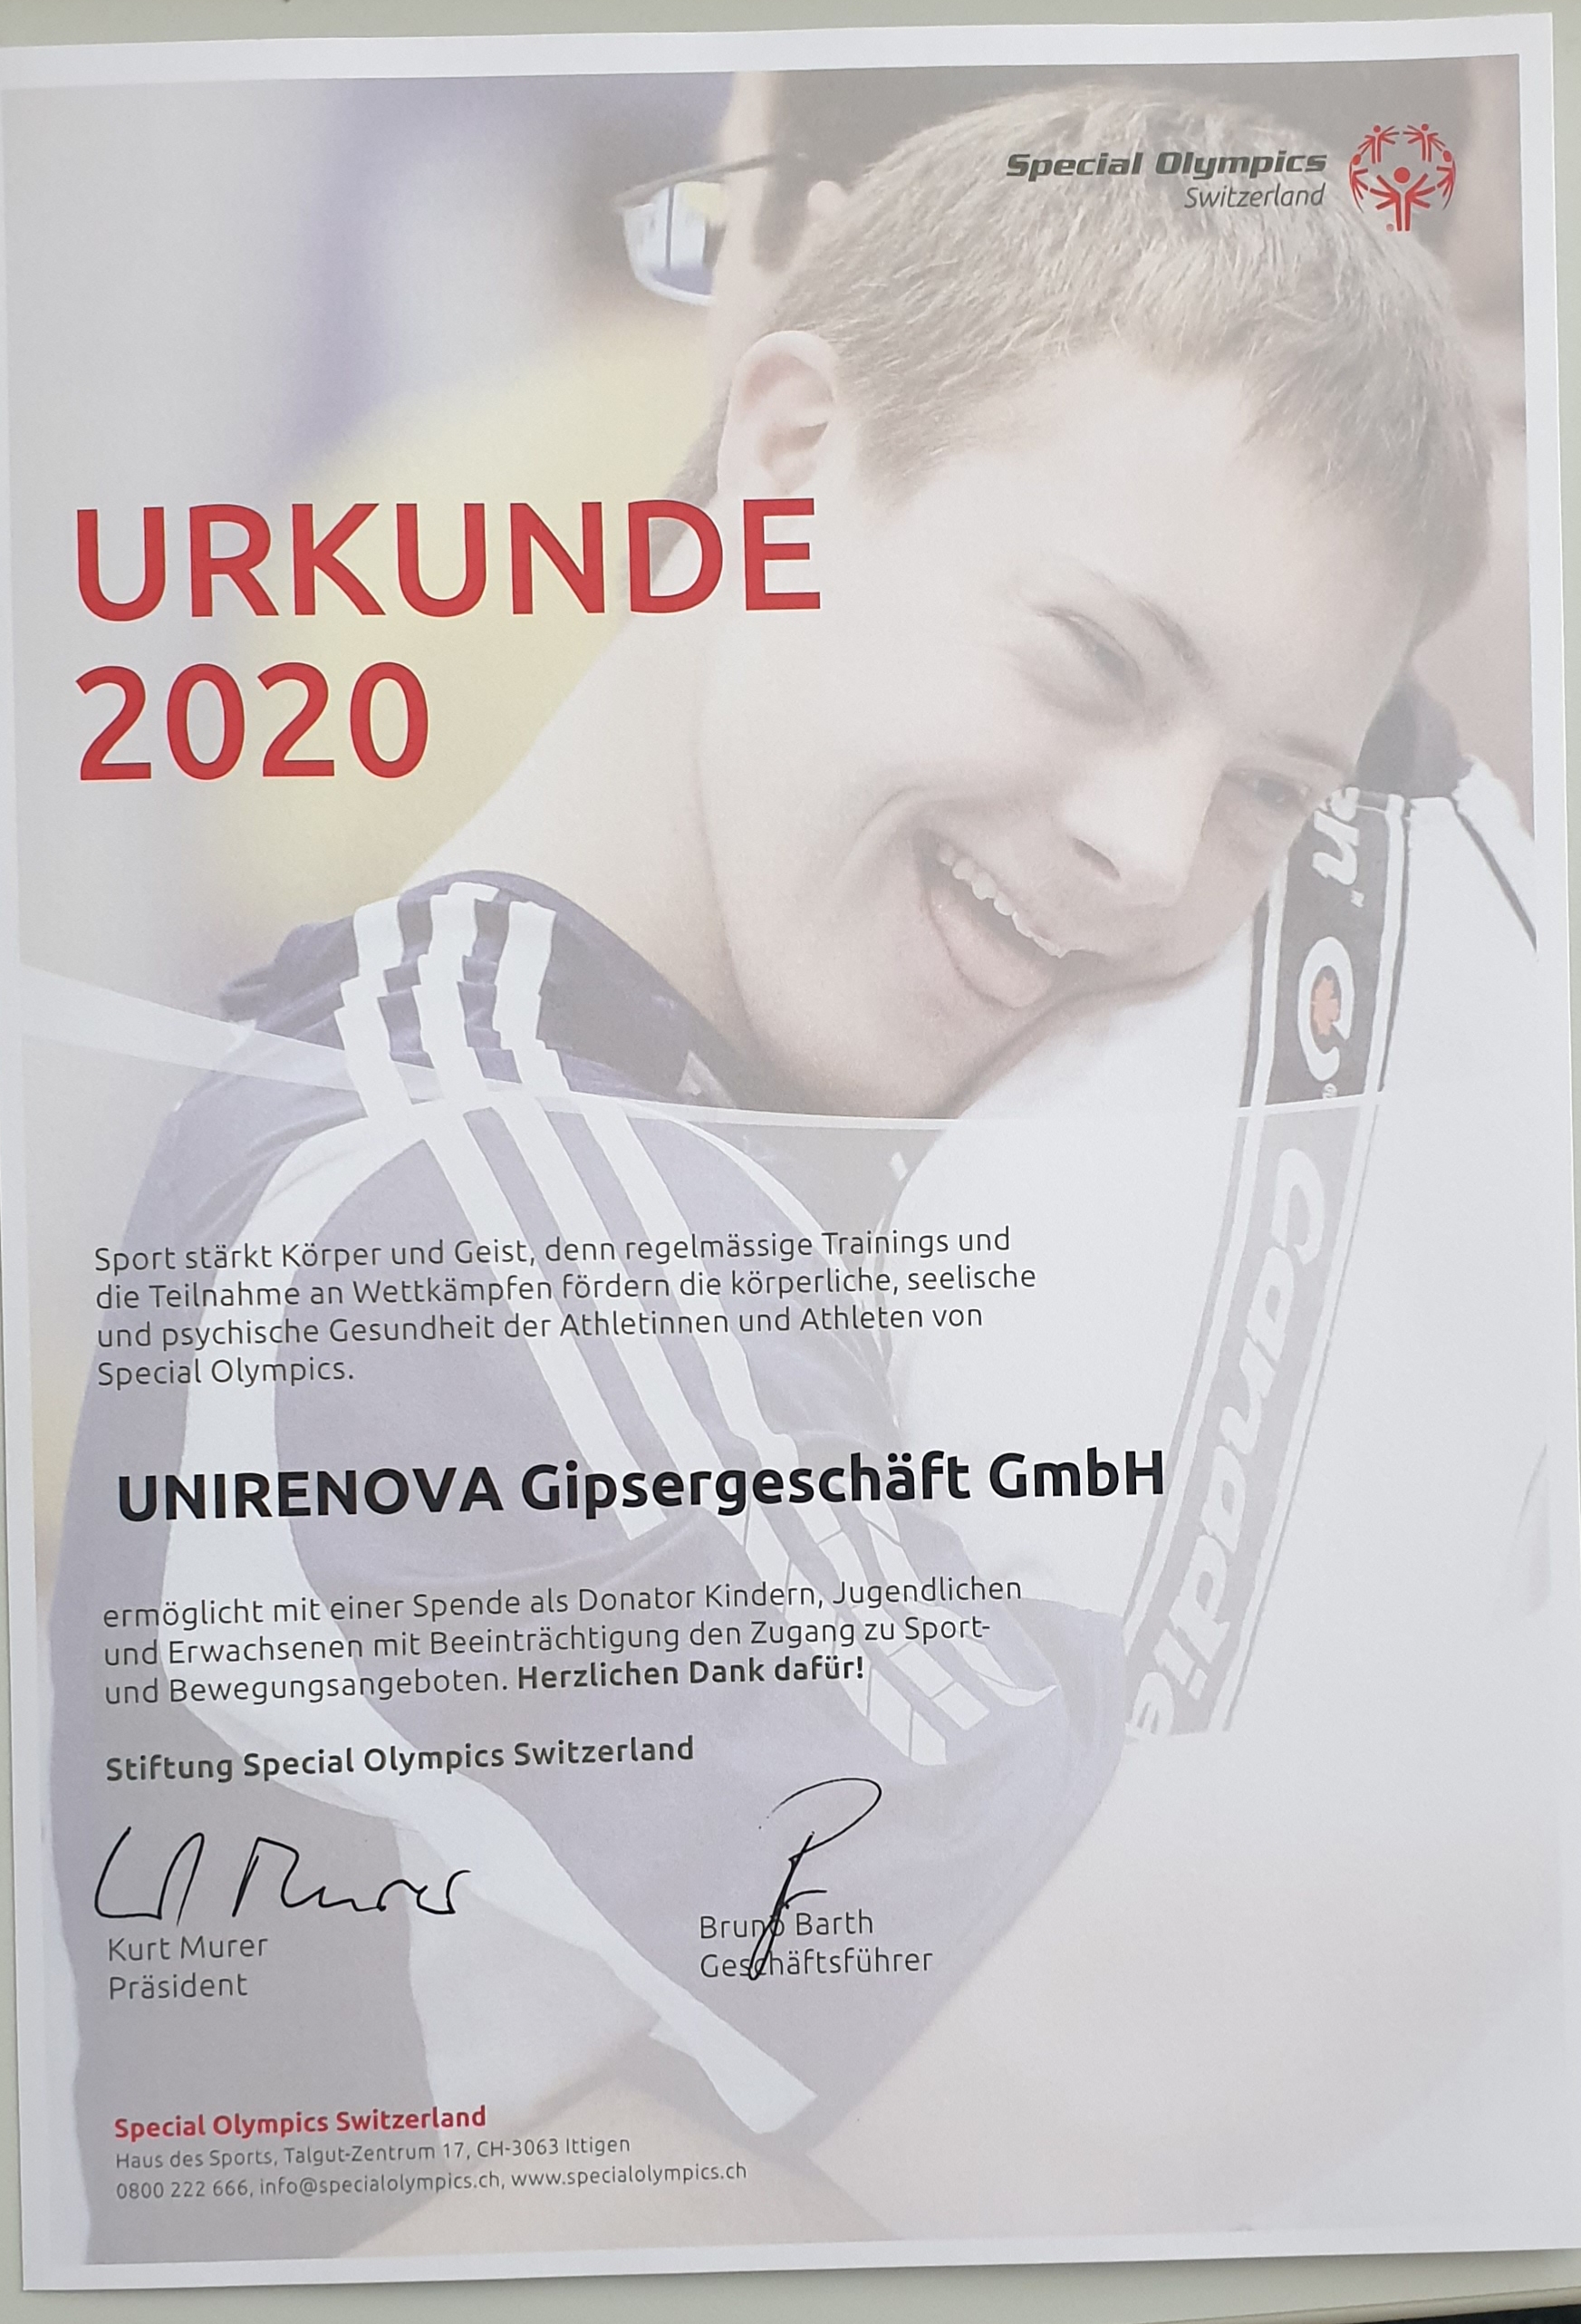 Urkunde-Swiss-Olympics-Switzerland-UNIRENOVA-2020jpg